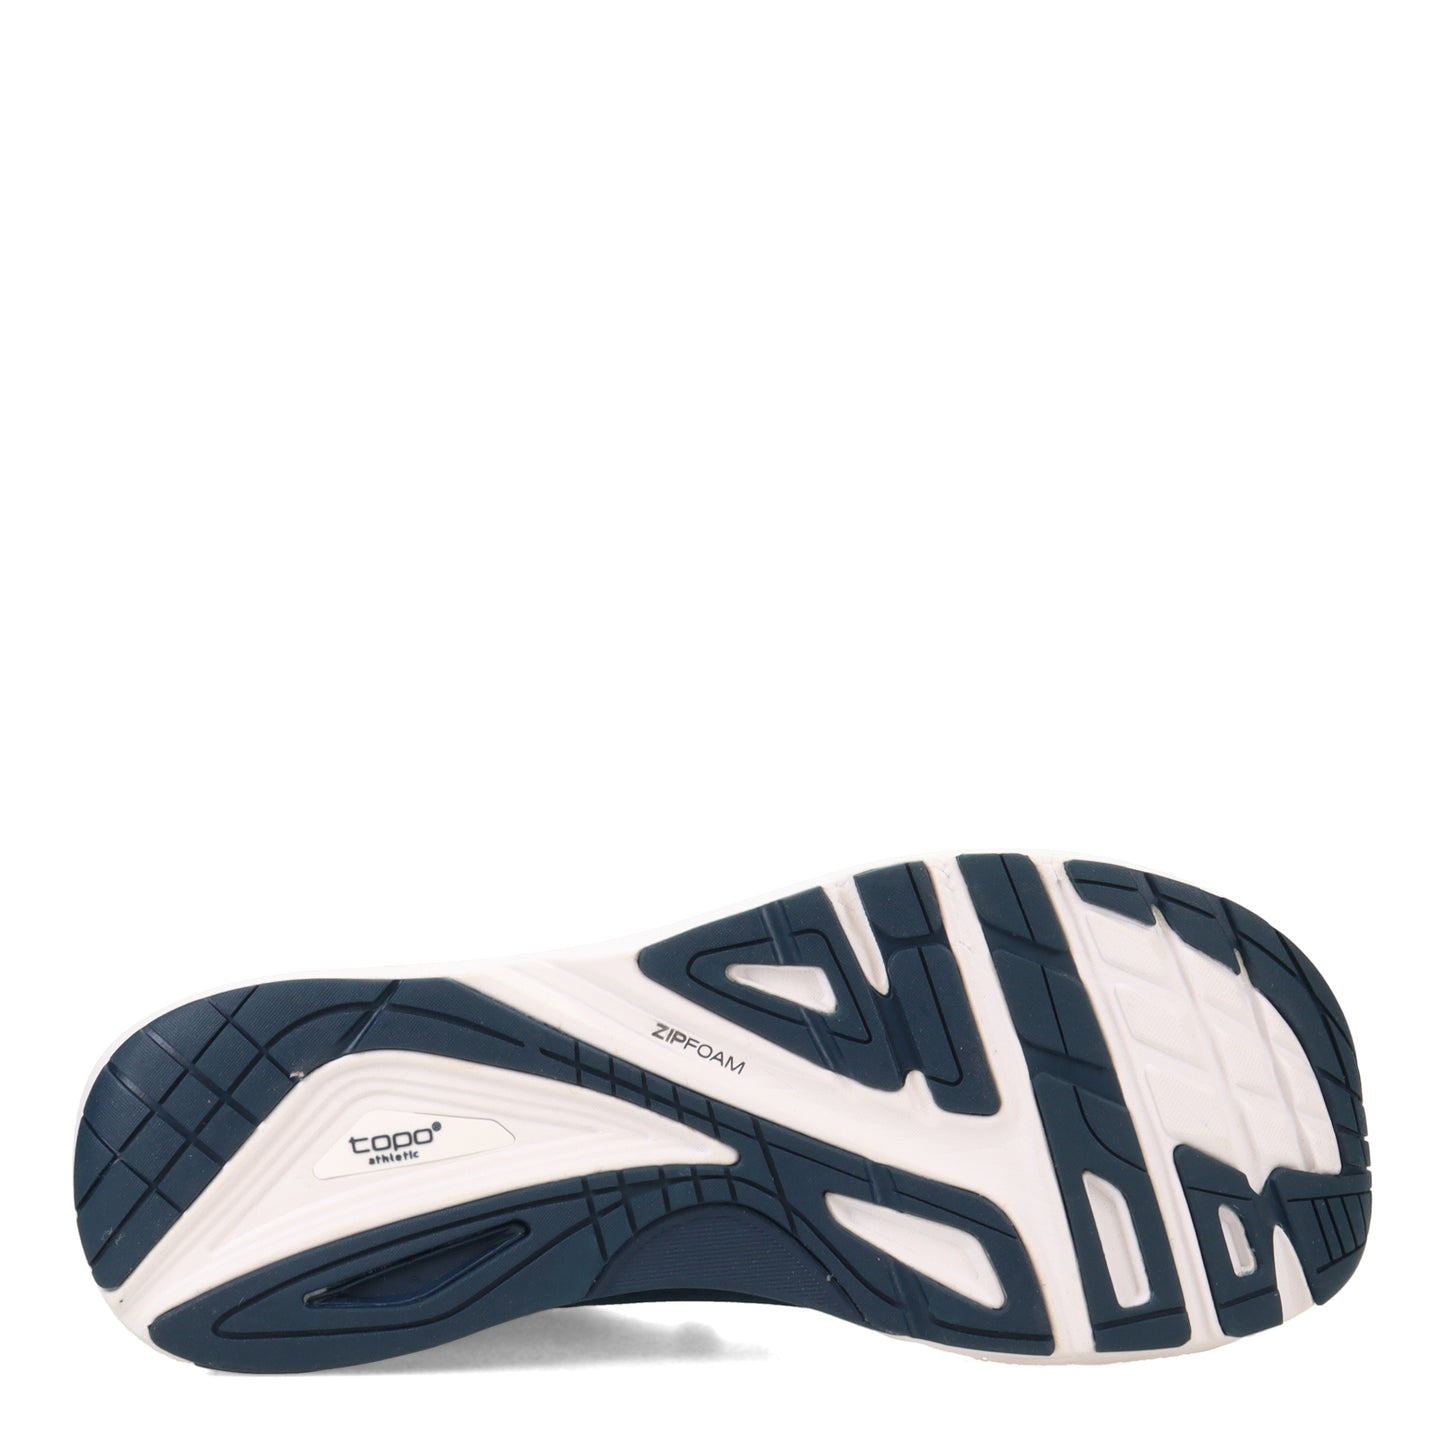 Peltz Shoes  Men's Topo Ultrafly 4 Running Shoe - Wide Width NAVY / BLACK M056-NAVBLKW